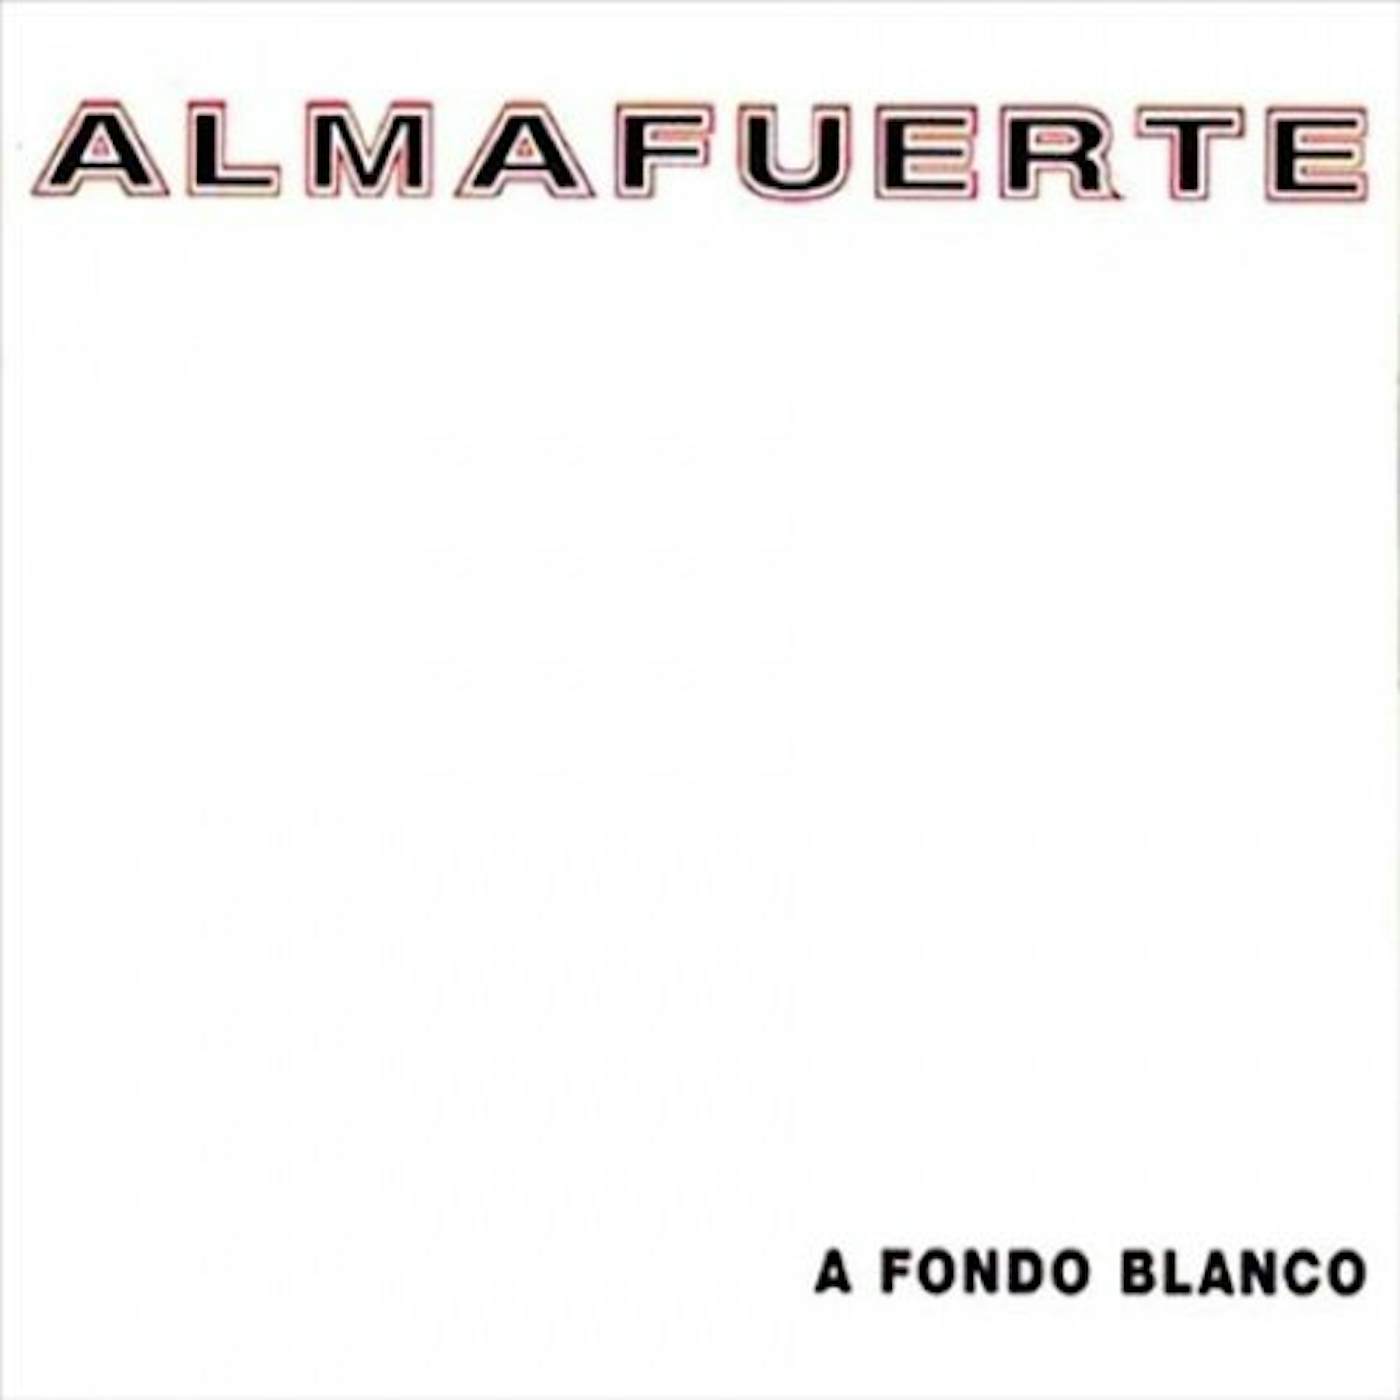 Almafuerte A Fondo Blanco Vinyl Record